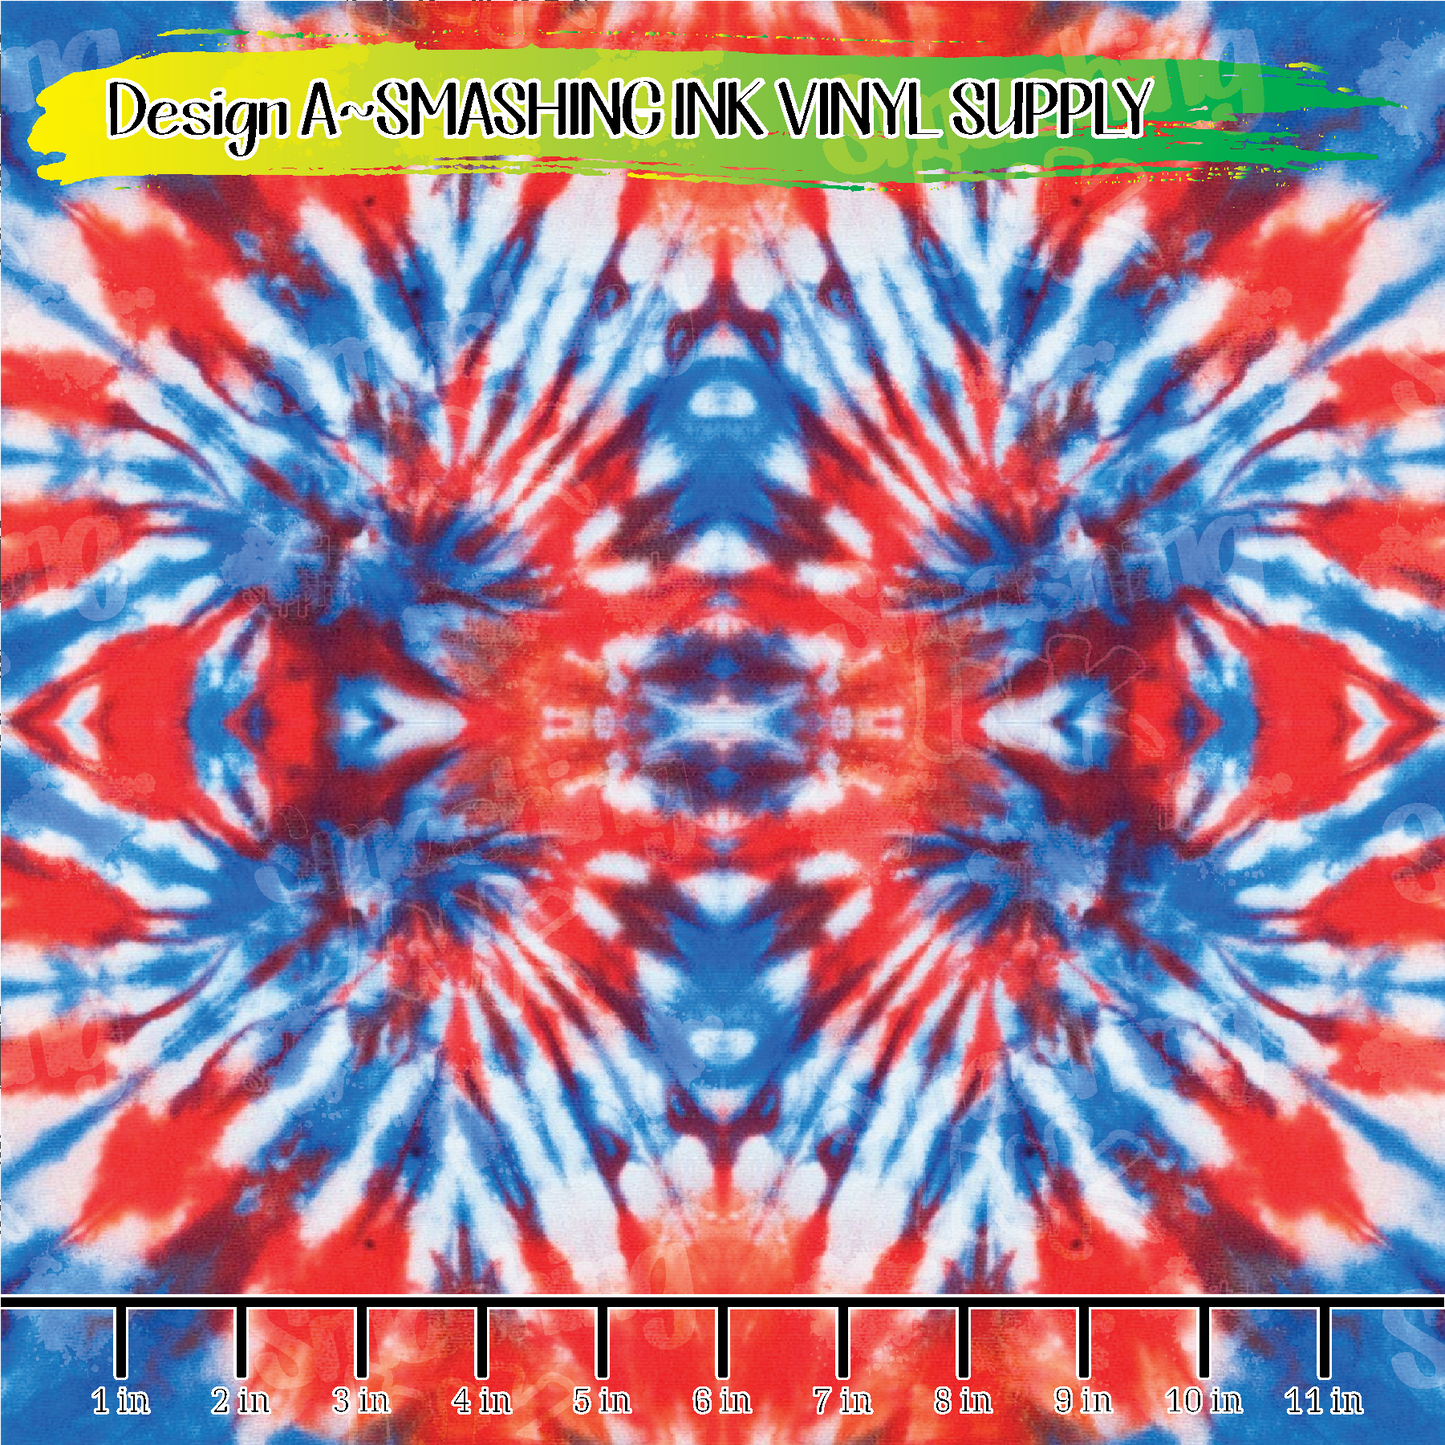 Patriotic Tie Dye ★ Laser Safe Adhesive Film (TAT 3 BUS DAYS)